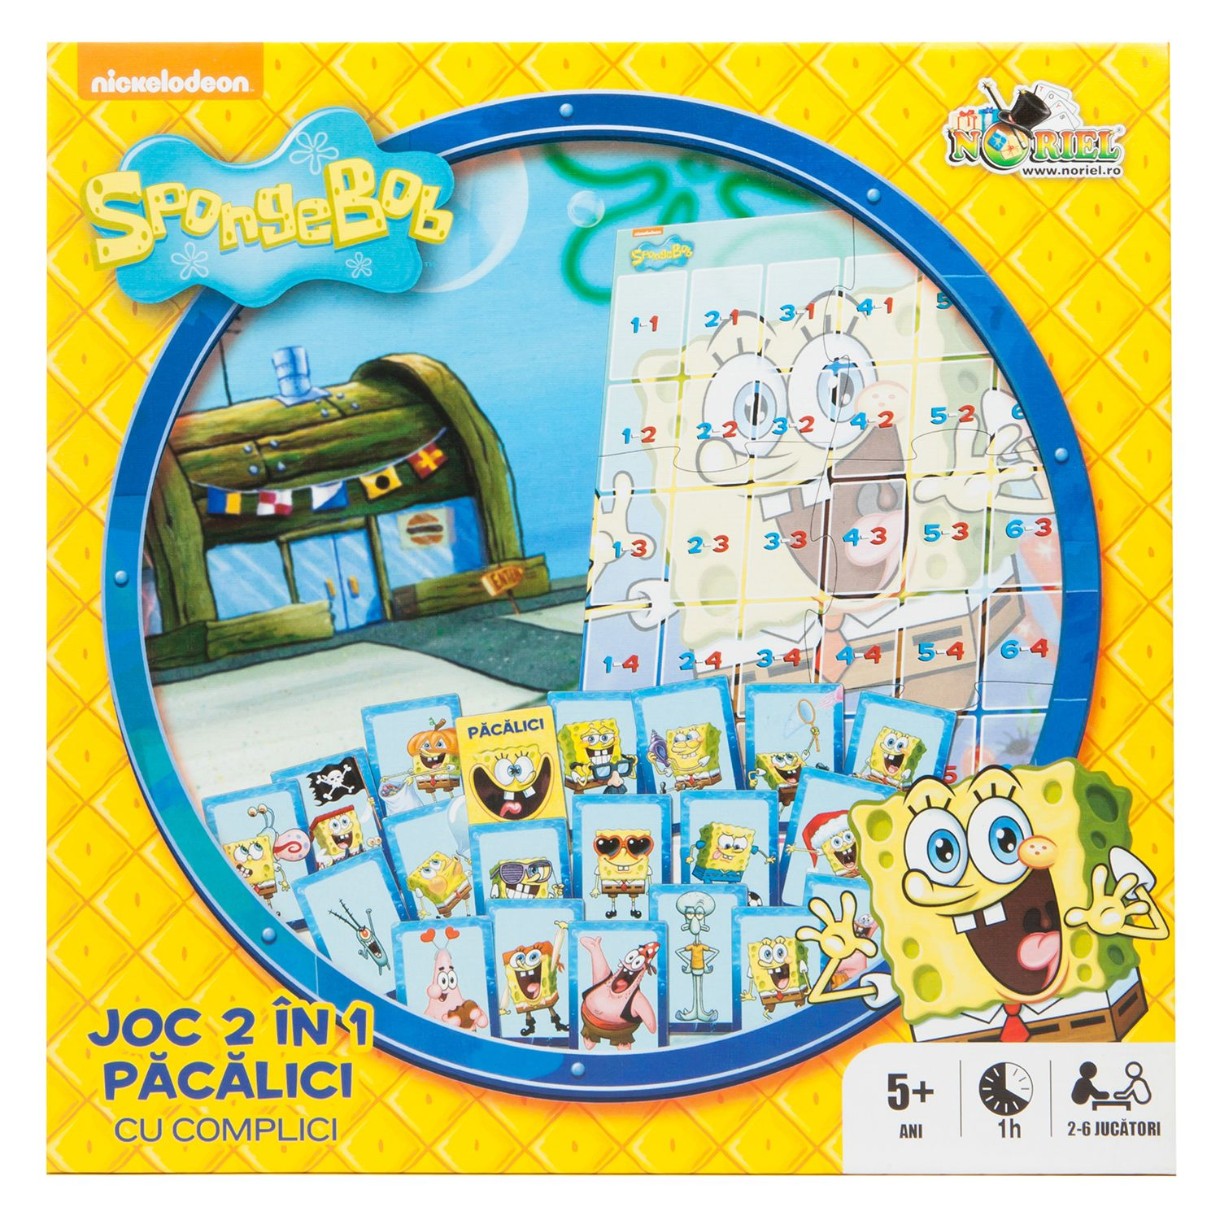 Настольная игра Noriel Pacalici cu complici - Sponge Bob (NOR9891)